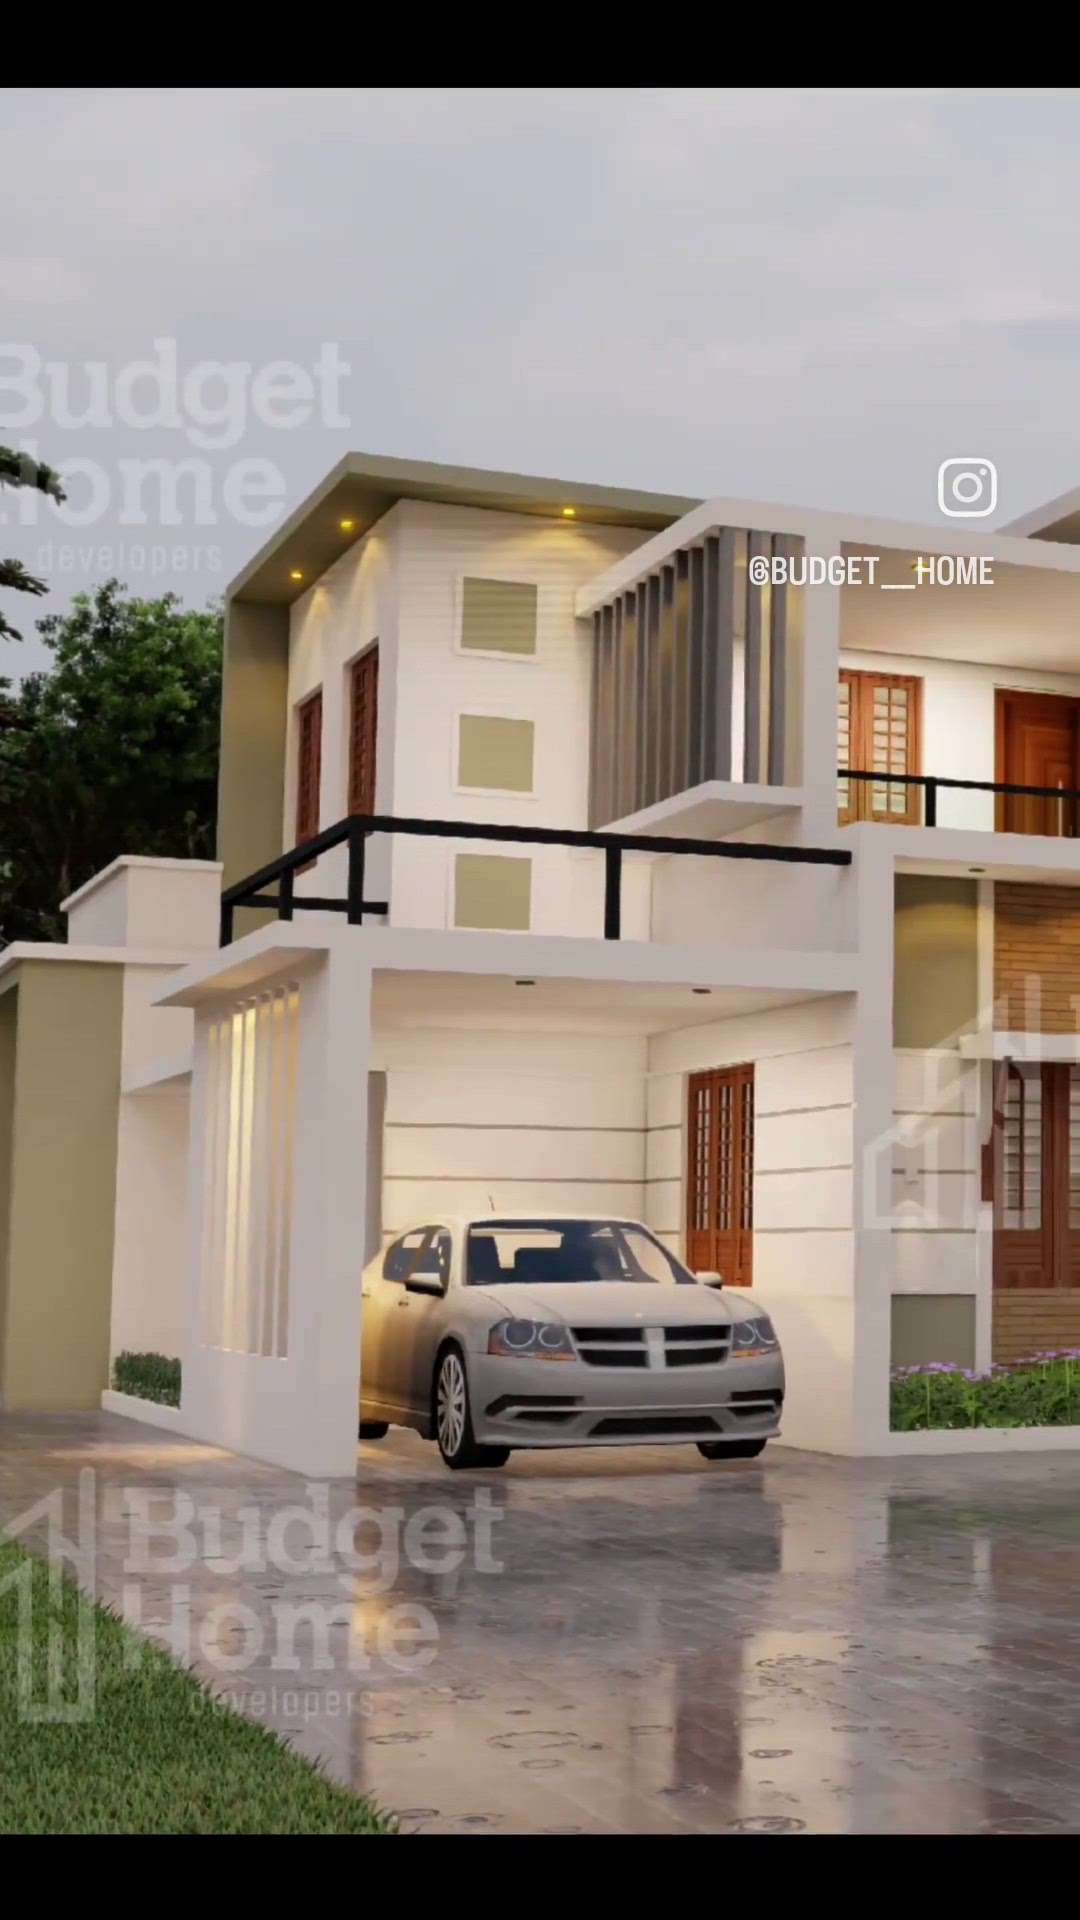 4bhk budget home
2100sqft

Designer

@budget___home

More details 📞

+918156800478
+919544000906

#budgethome
#keralahomedesign 
#keralahomes 
#architecturekerala 
#veedu